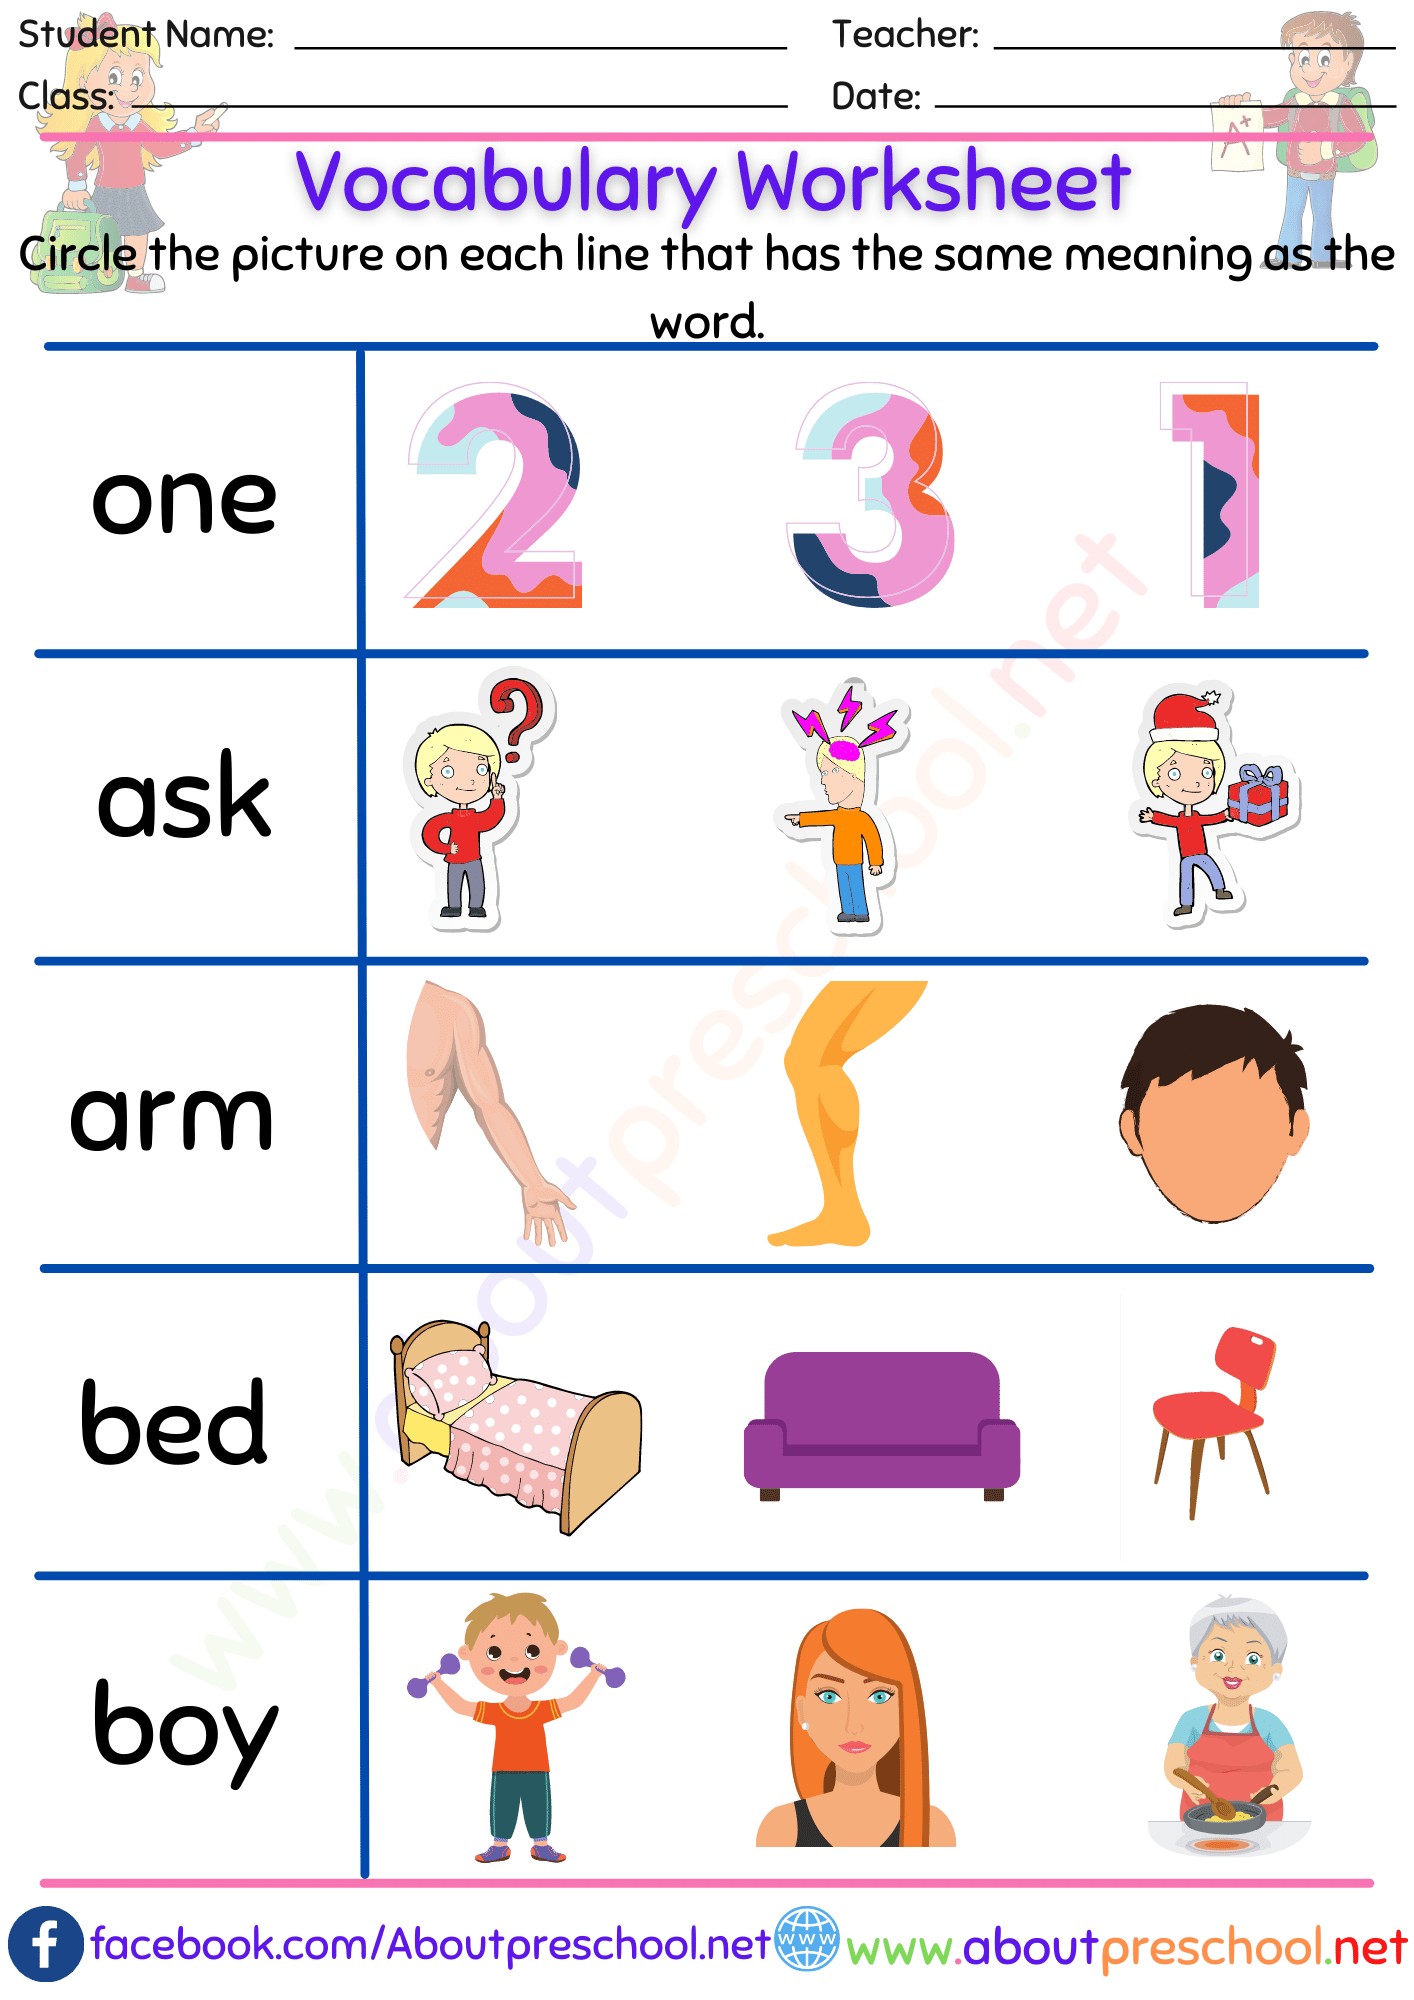 Vocabulary Worksheet-2